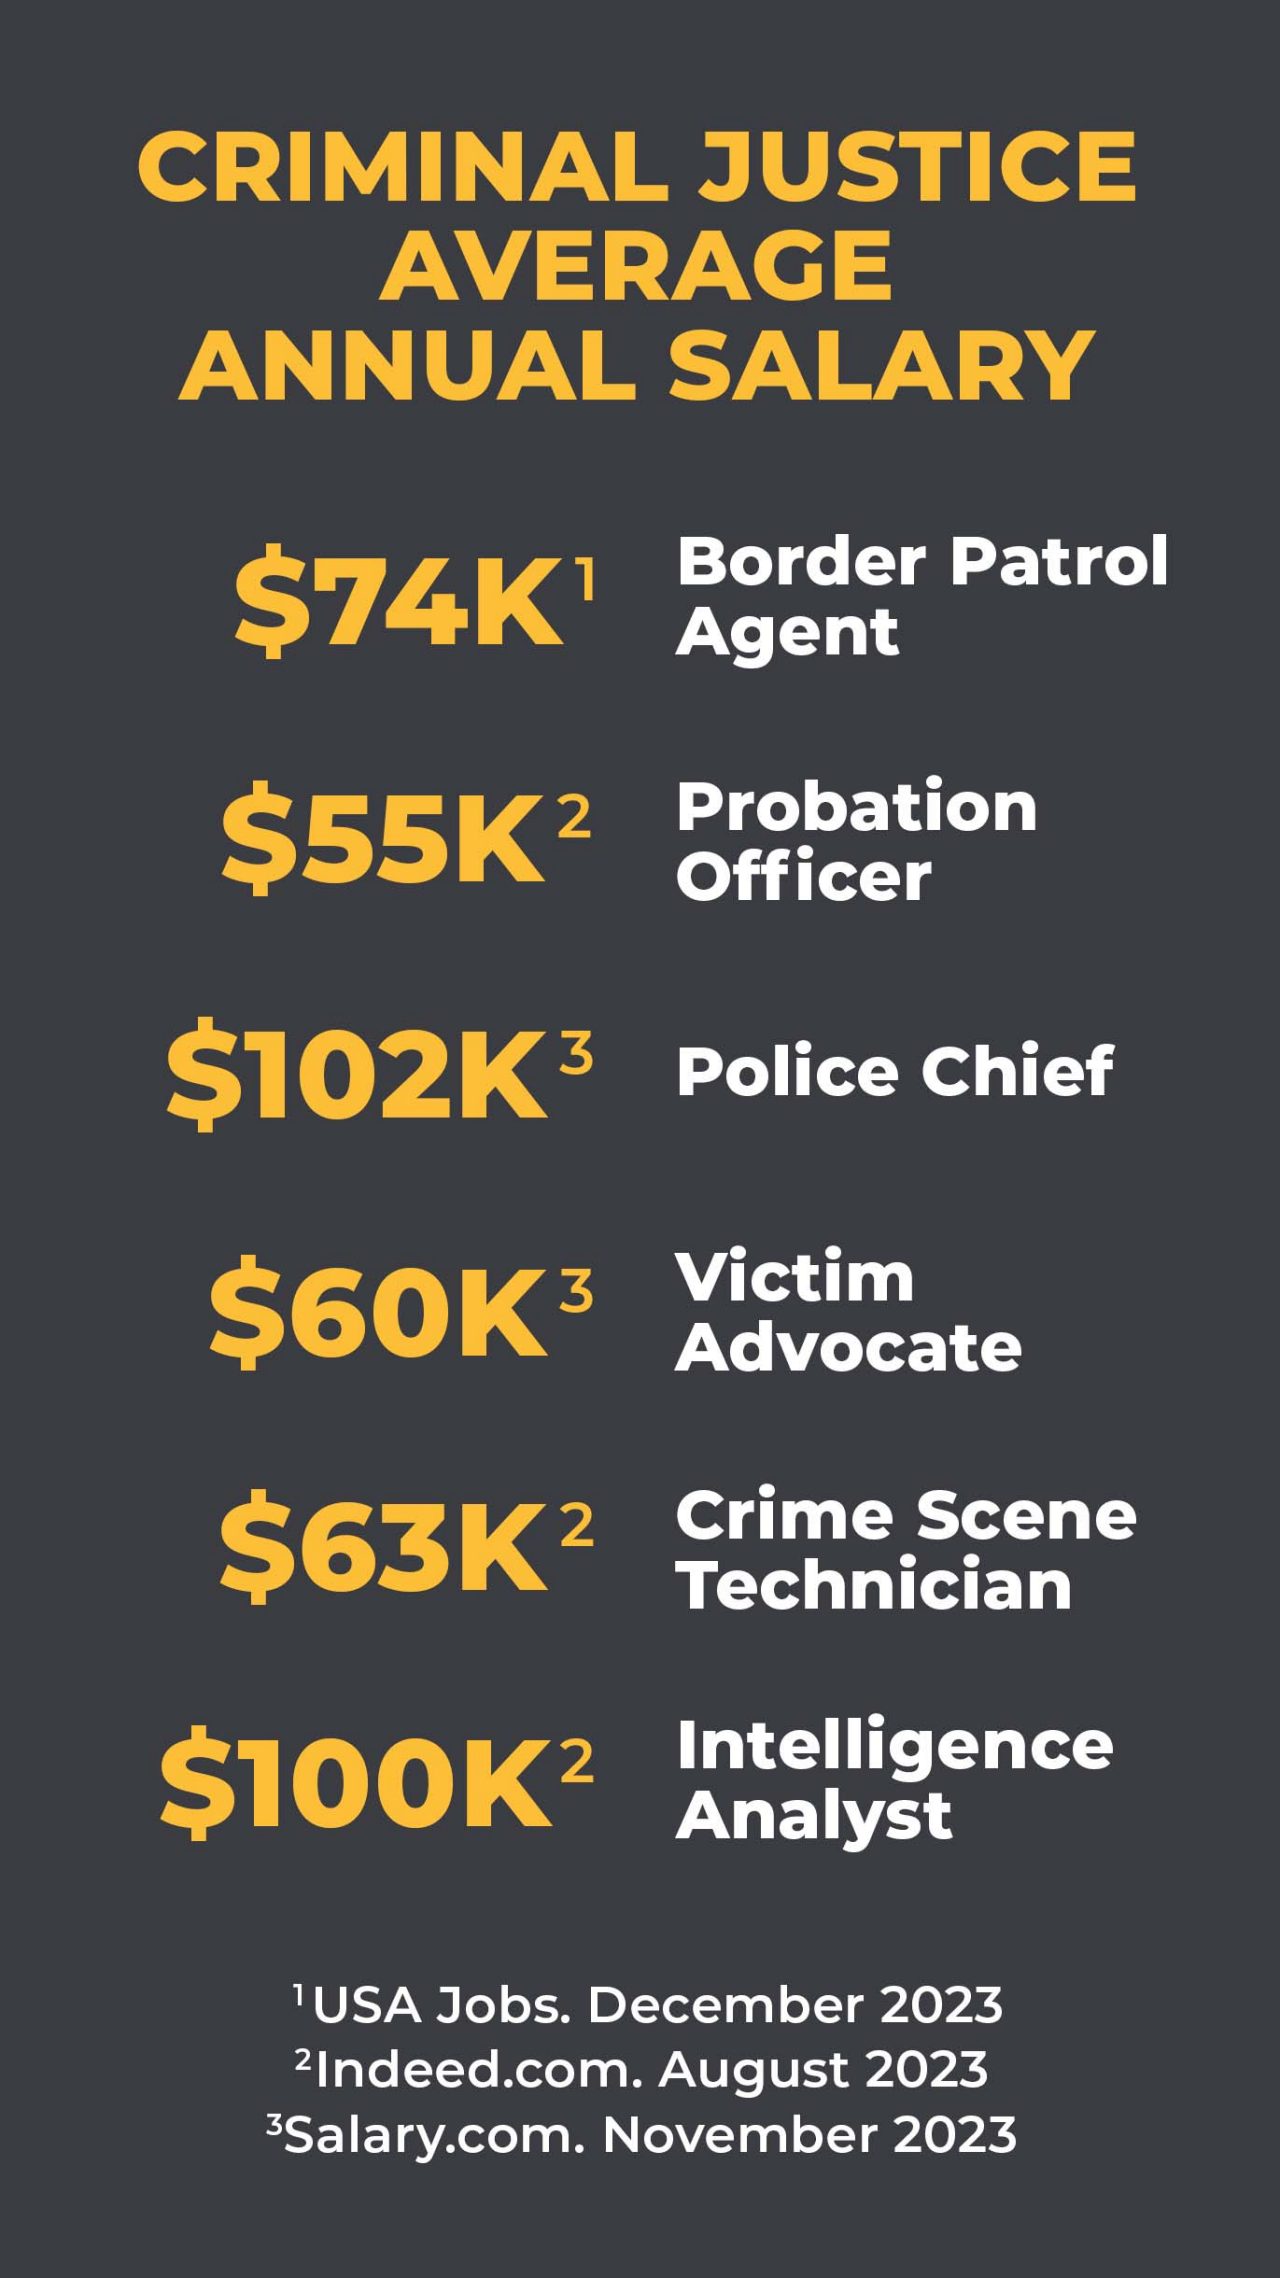 Text that reads, "Criminal Justice Average Annual Salary; $74K Border Patrol Agent; $55K Probation Officer; $102K Police Chief; $60K Victim Advocate; $63K Crime Scene Technician; $100K Intelligence Analyst."